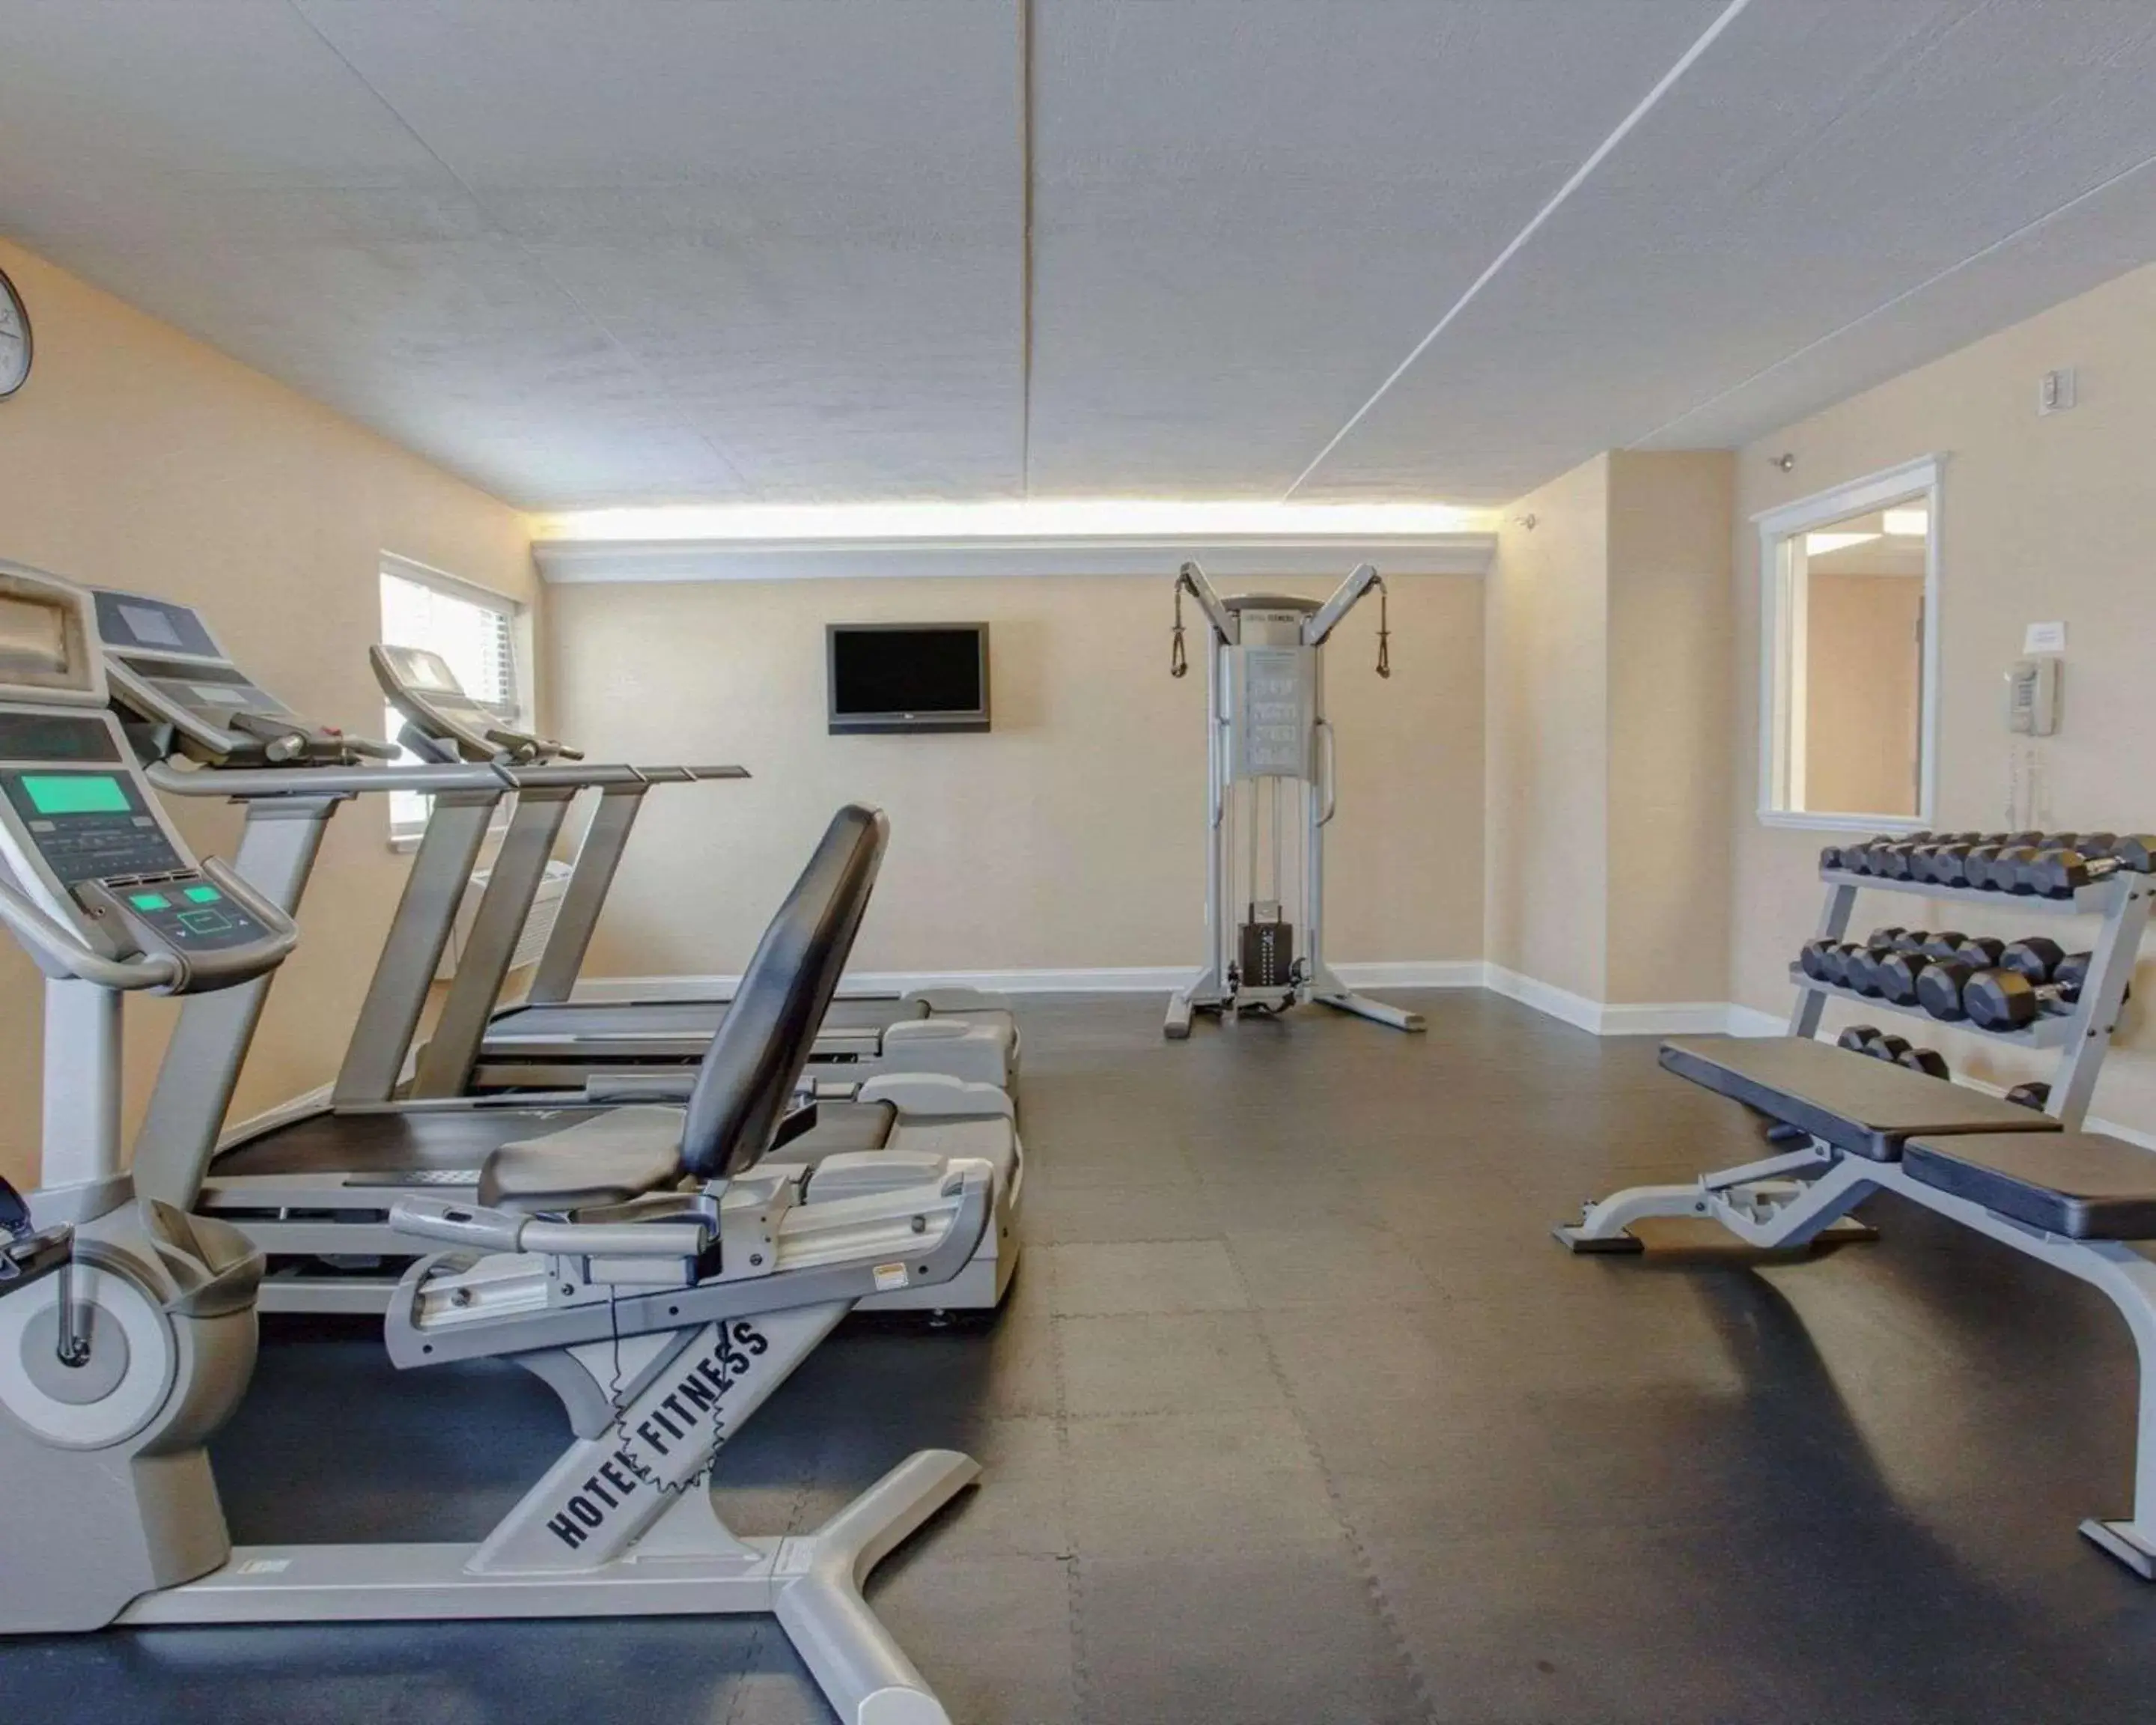 Fitness centre/facilities, Fitness Center/Facilities in Comfort Inn Bangor